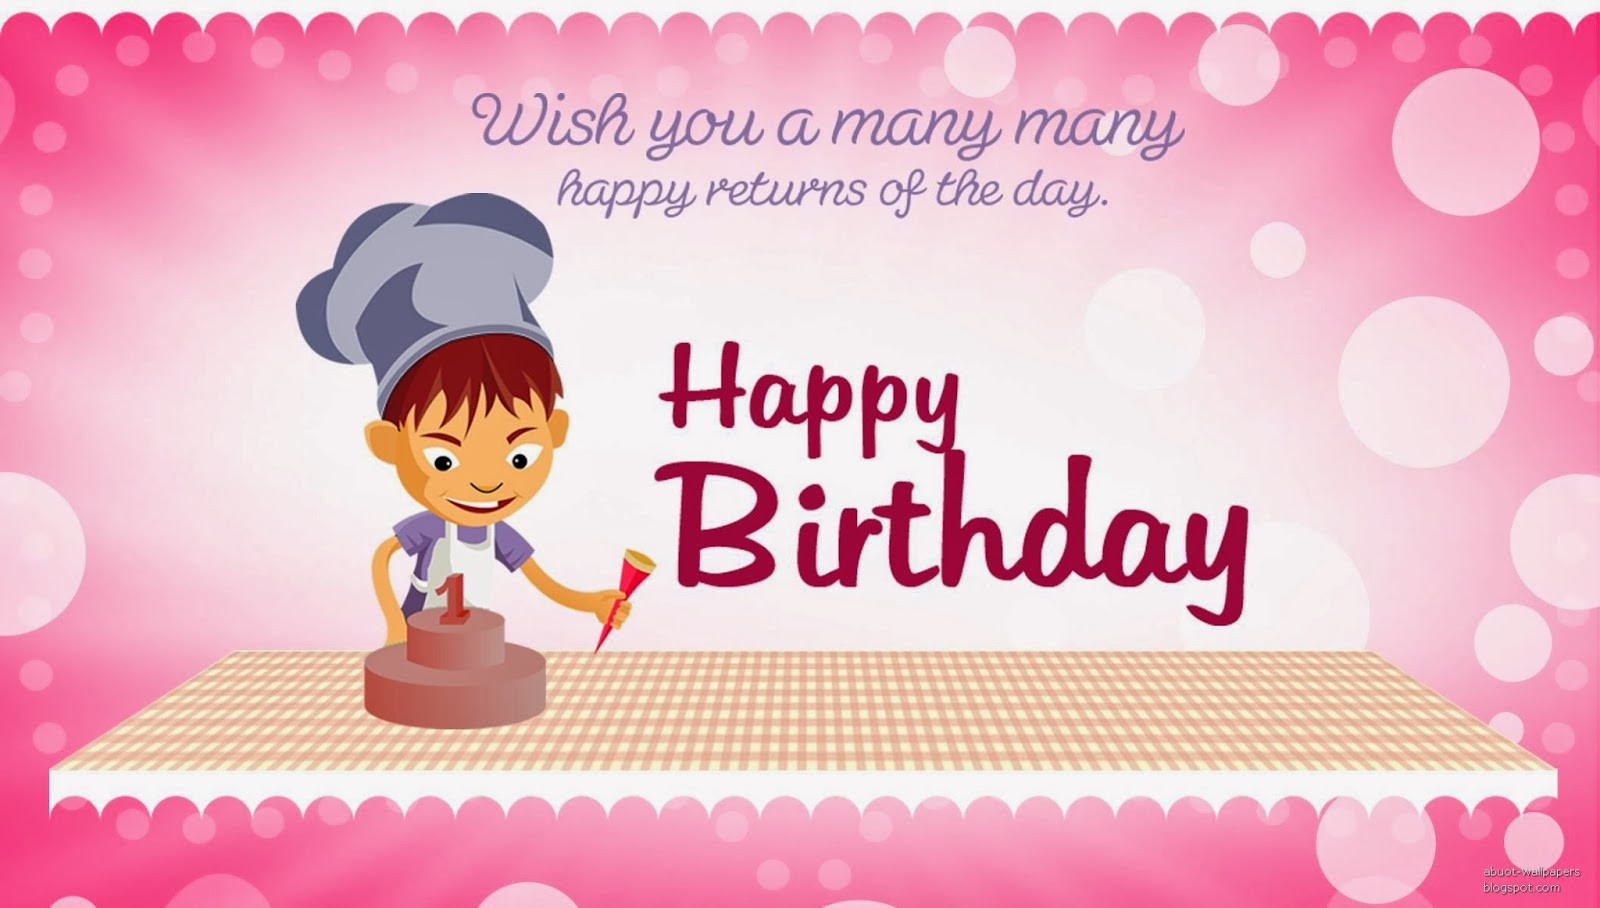 Cute Happy Birthday Wishes
 Cute Pink Birthday Card with ammazing happy birthday